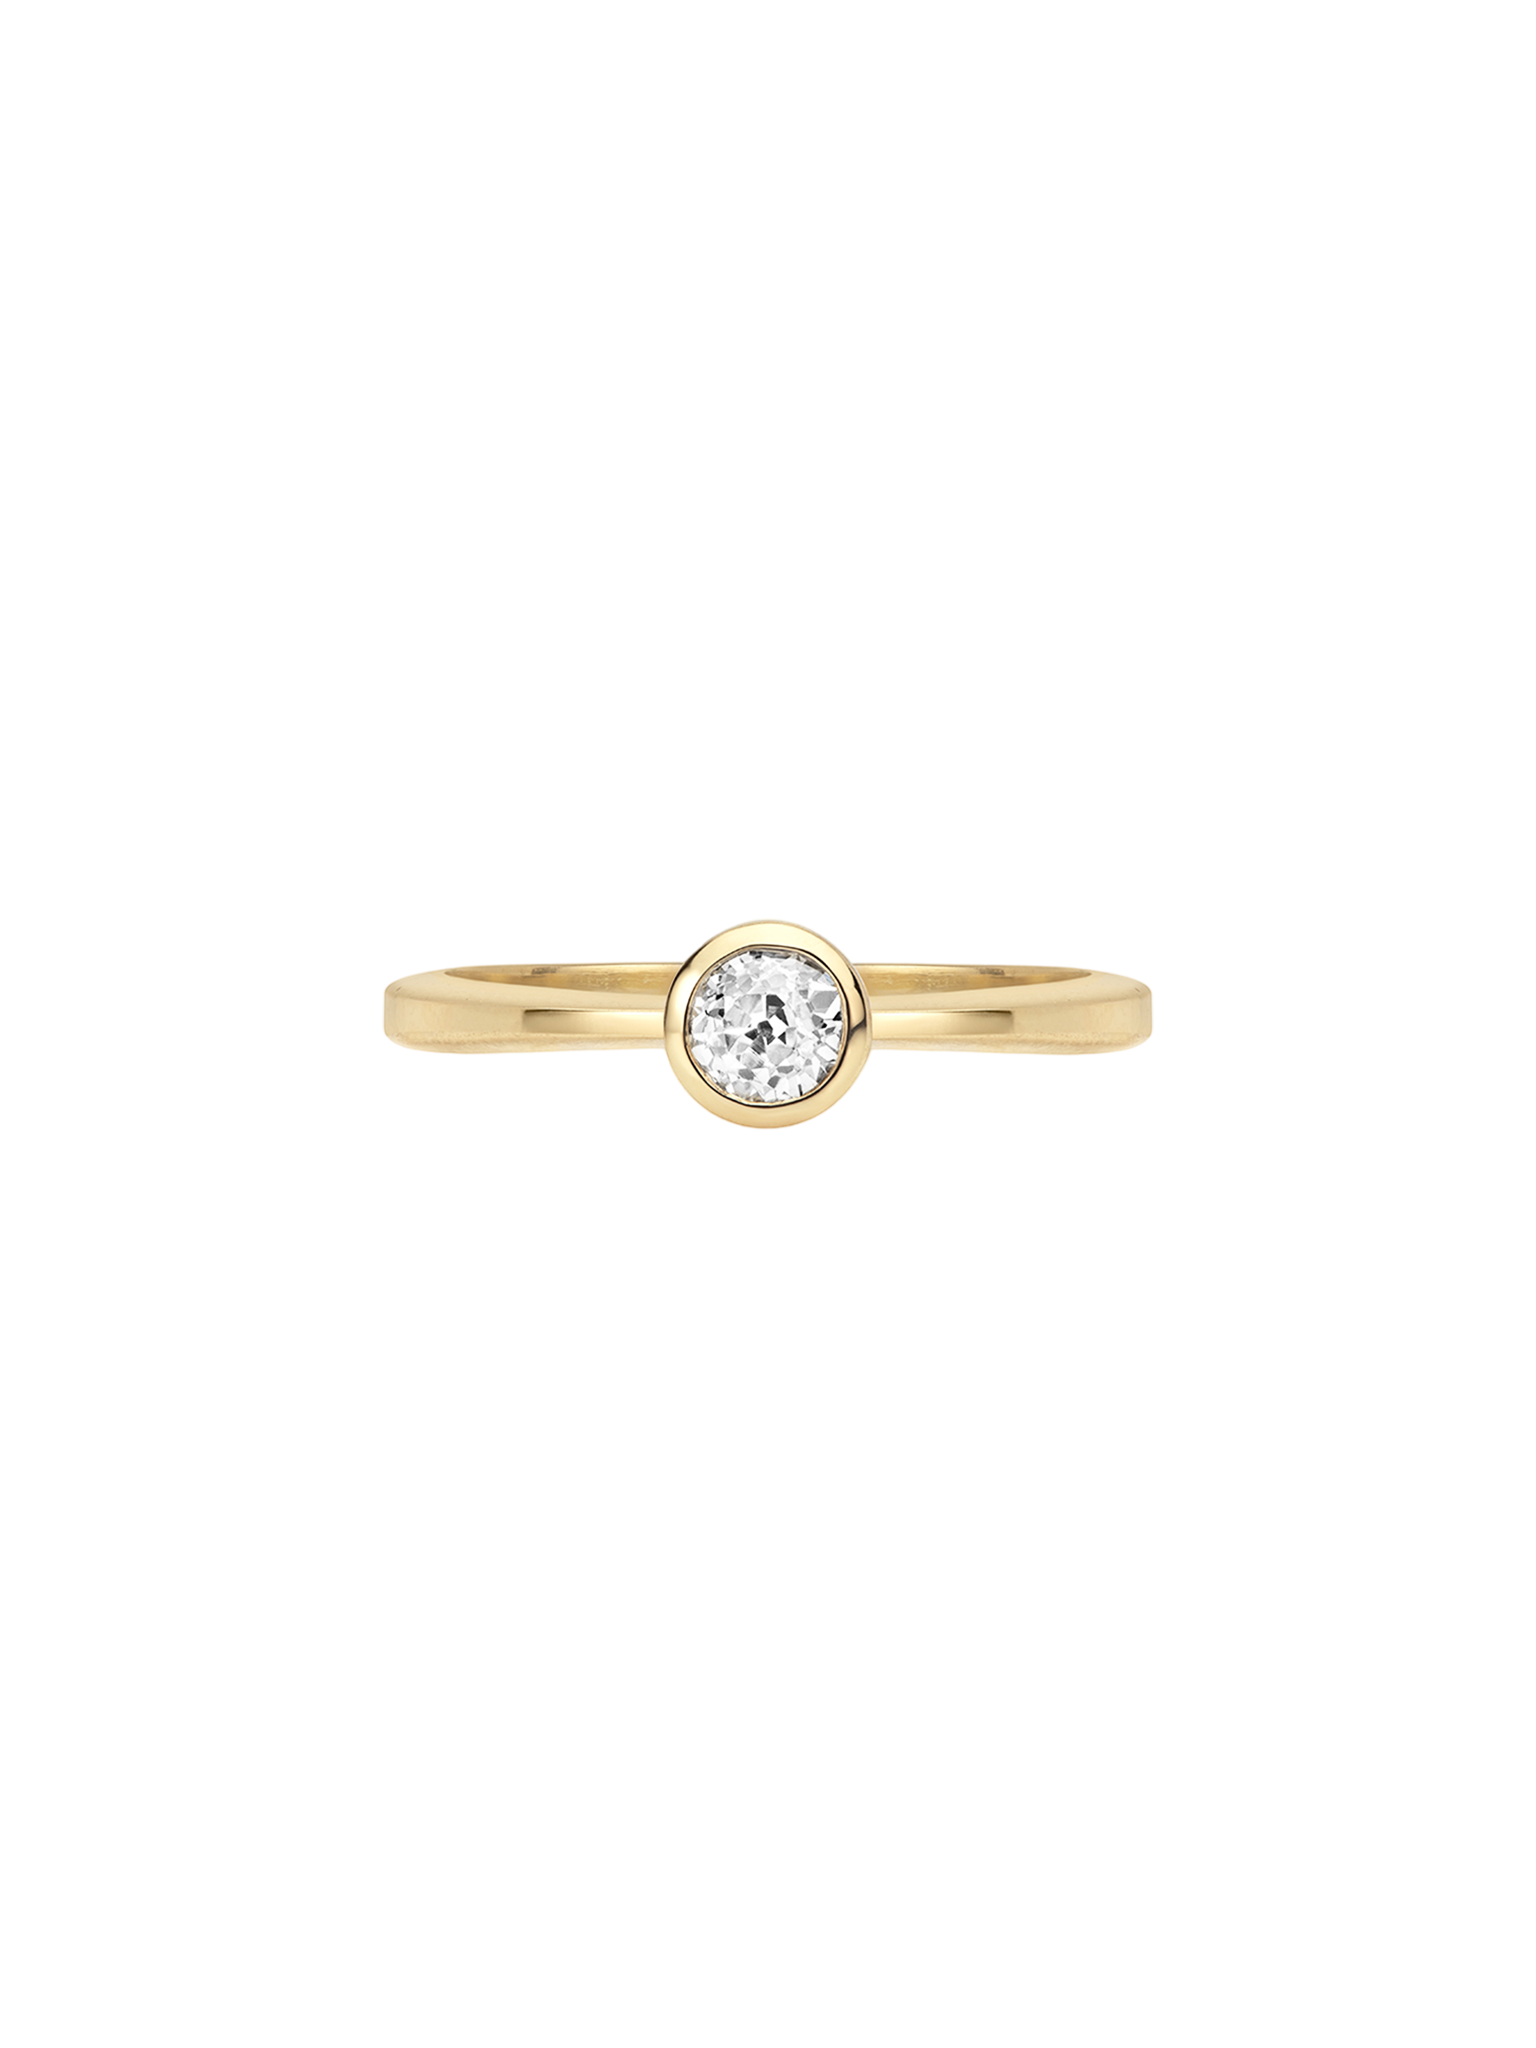 Padma antique diamond ring